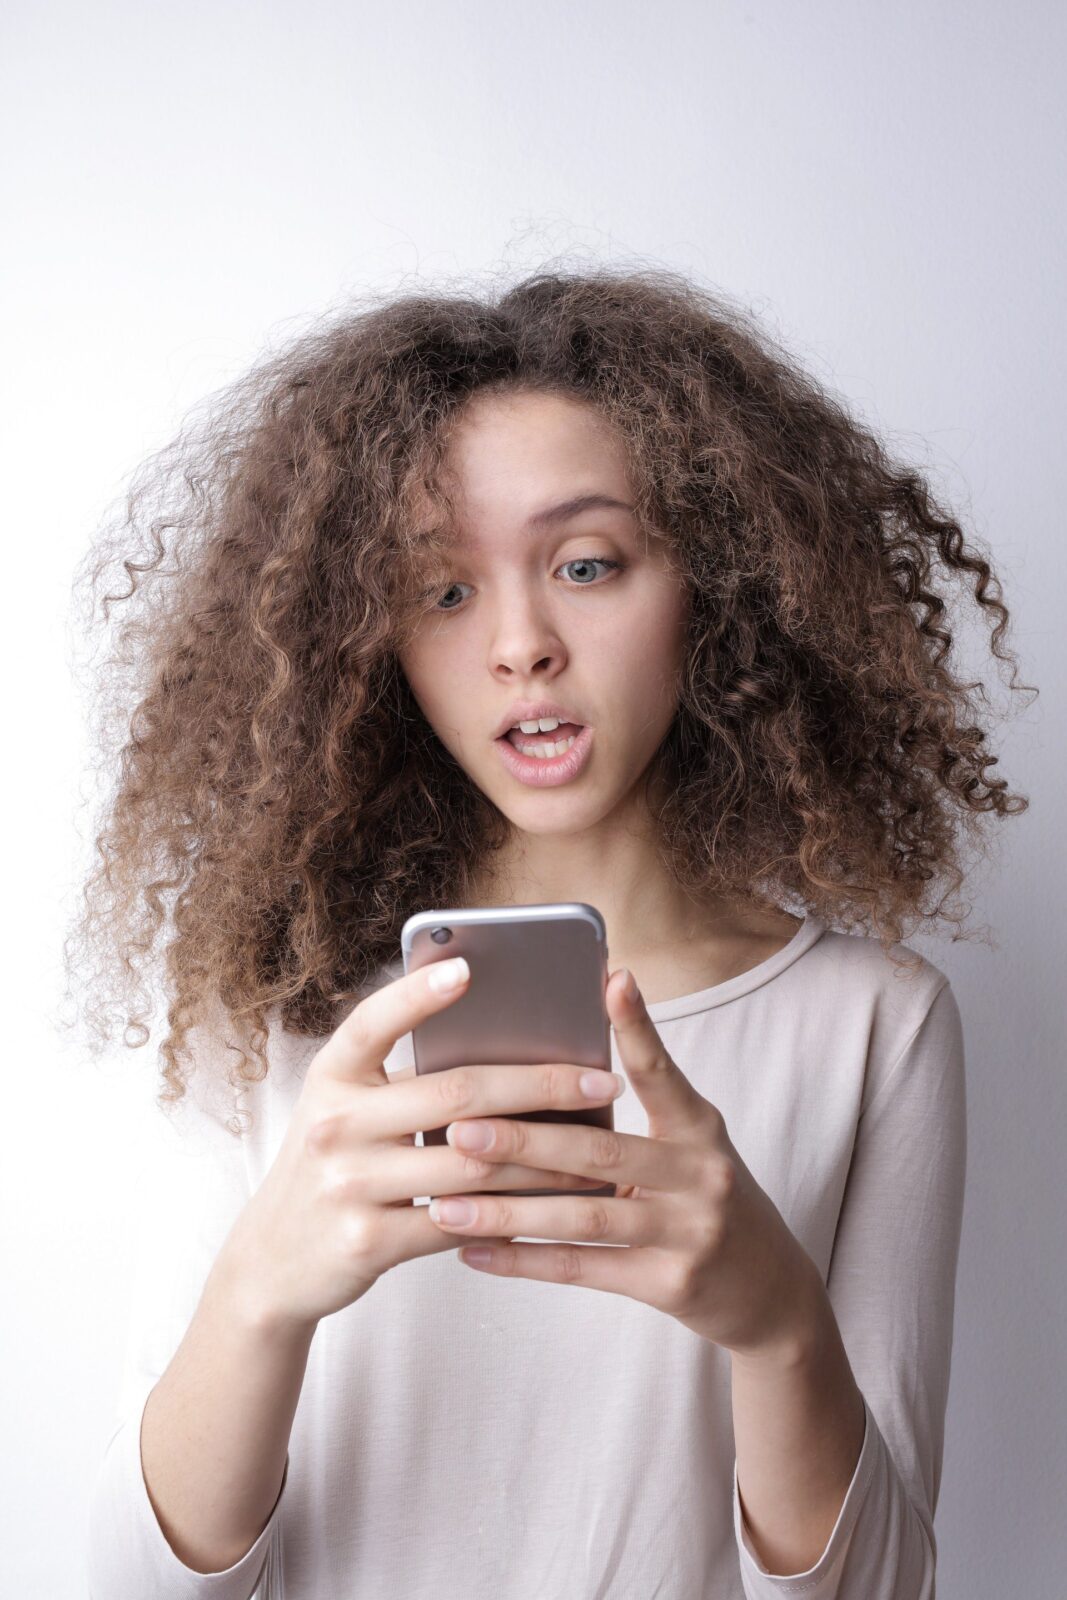 7 Interesting Yet Negative Effects of Social Media Addiction on Children